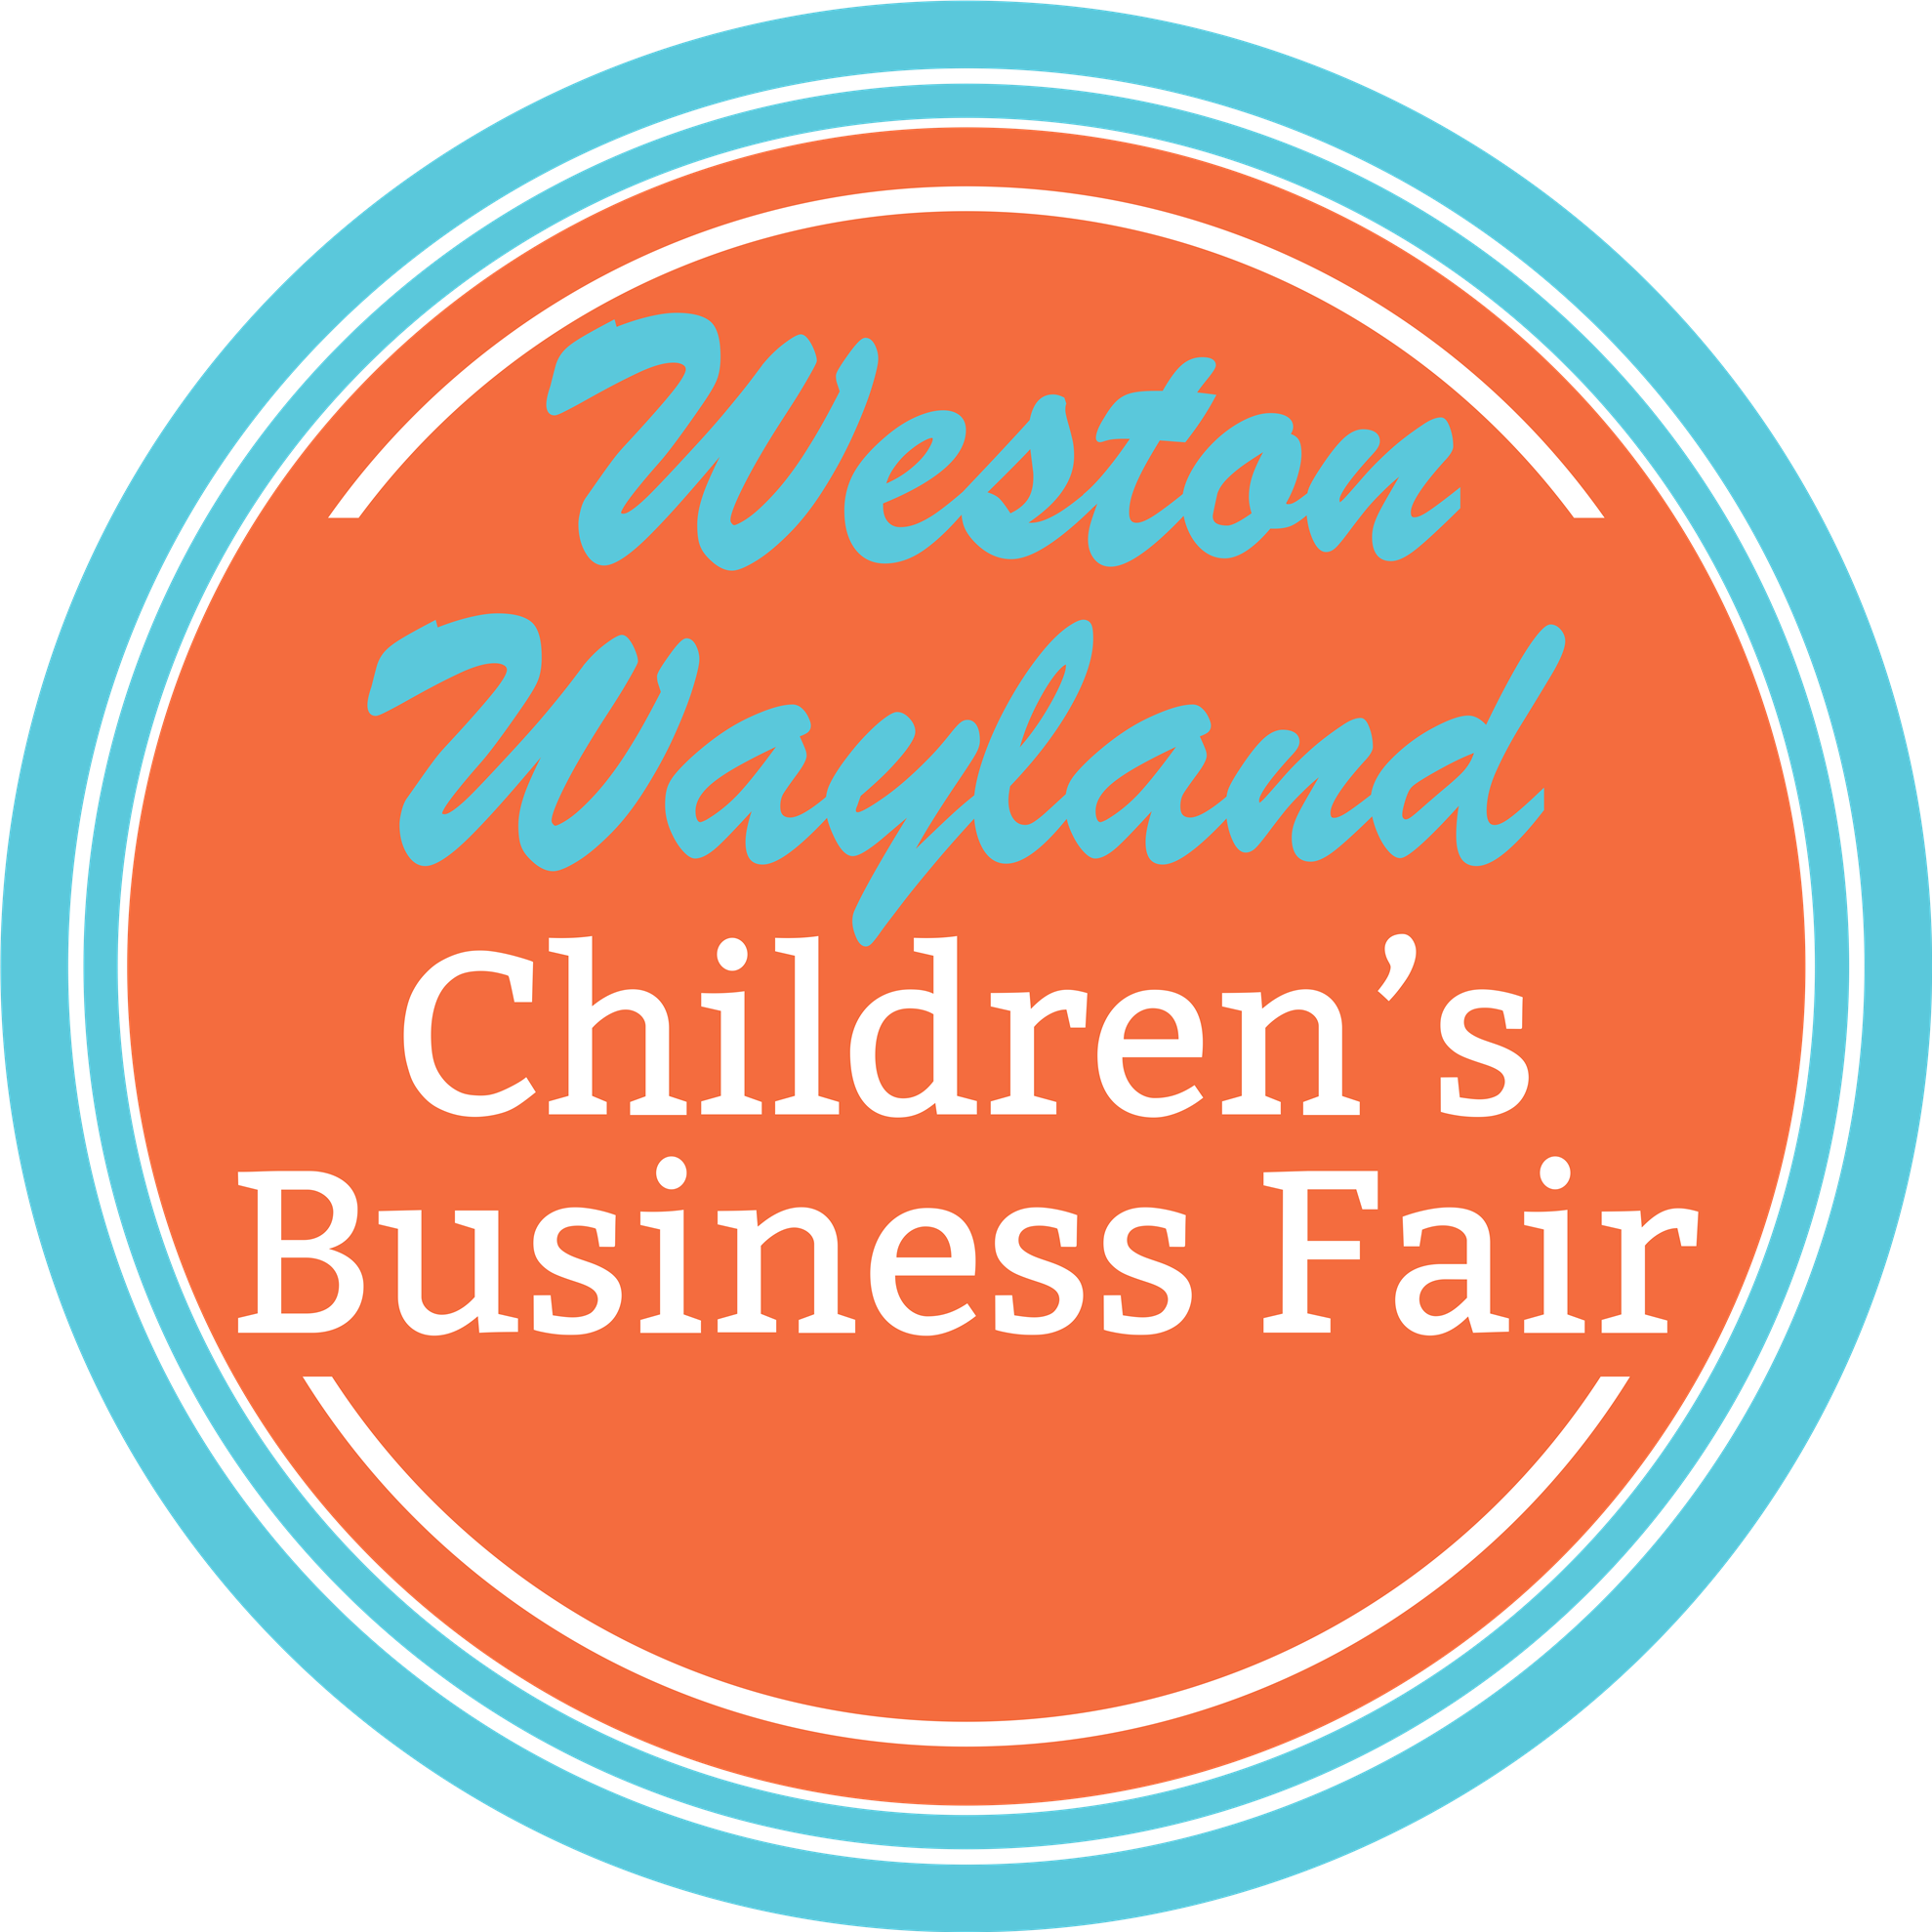 4:30 pm Children's Business Fair Planning